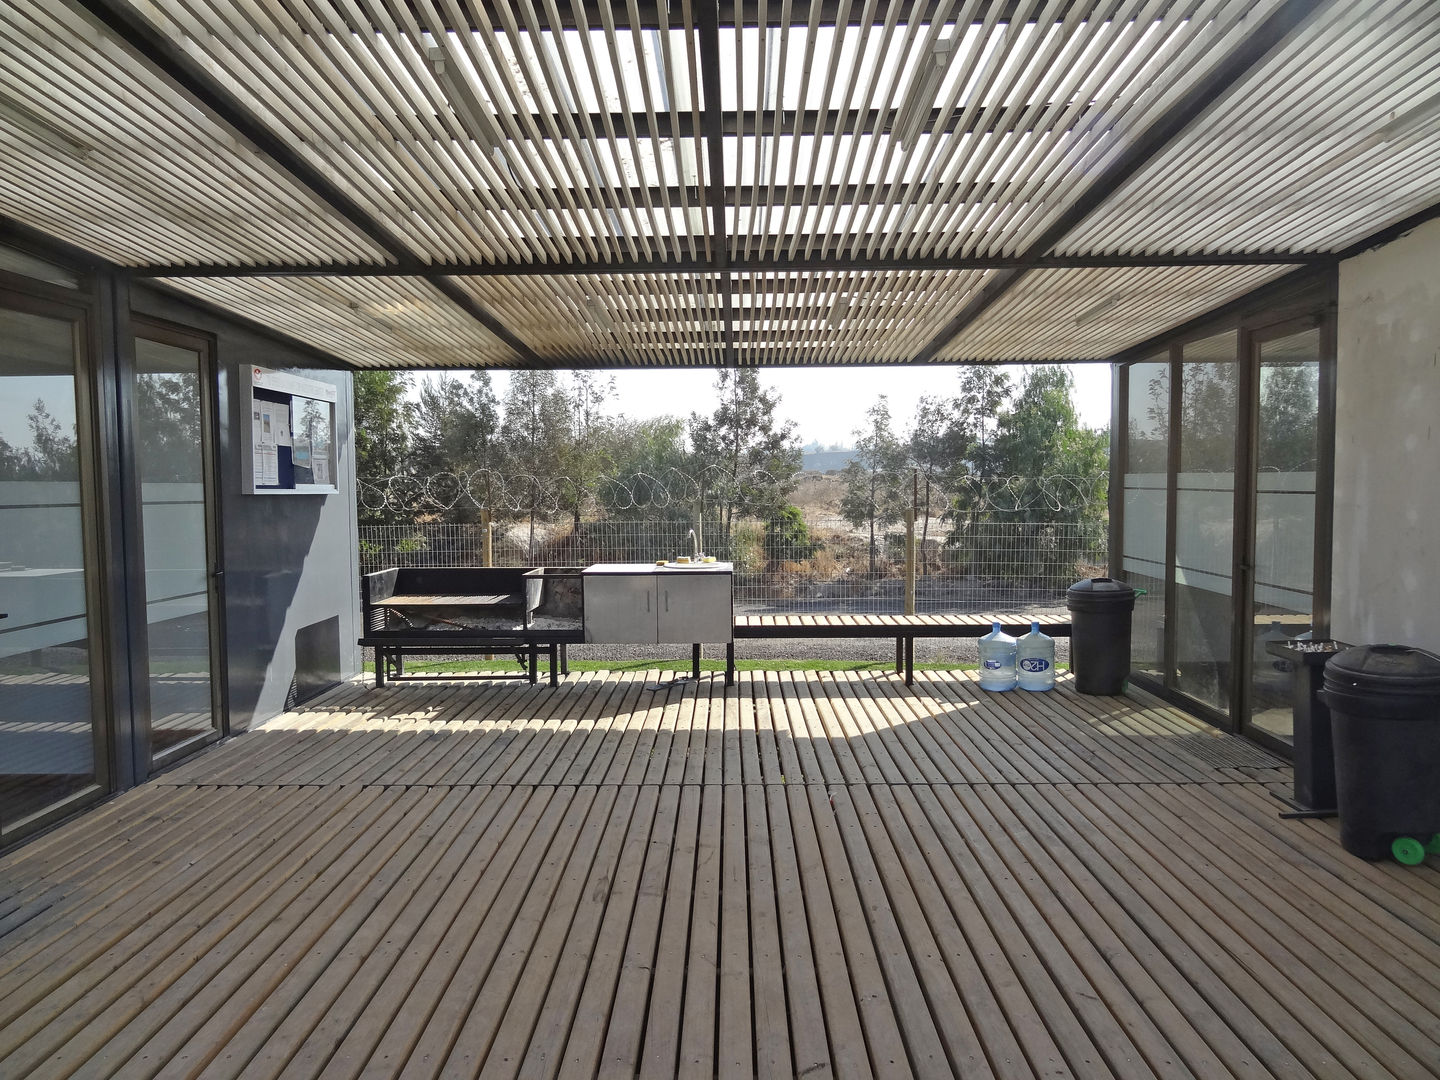 Oficinas Modulares Transportables, m2 estudio arquitectos - Santiago m2 estudio arquitectos - Santiago Schody